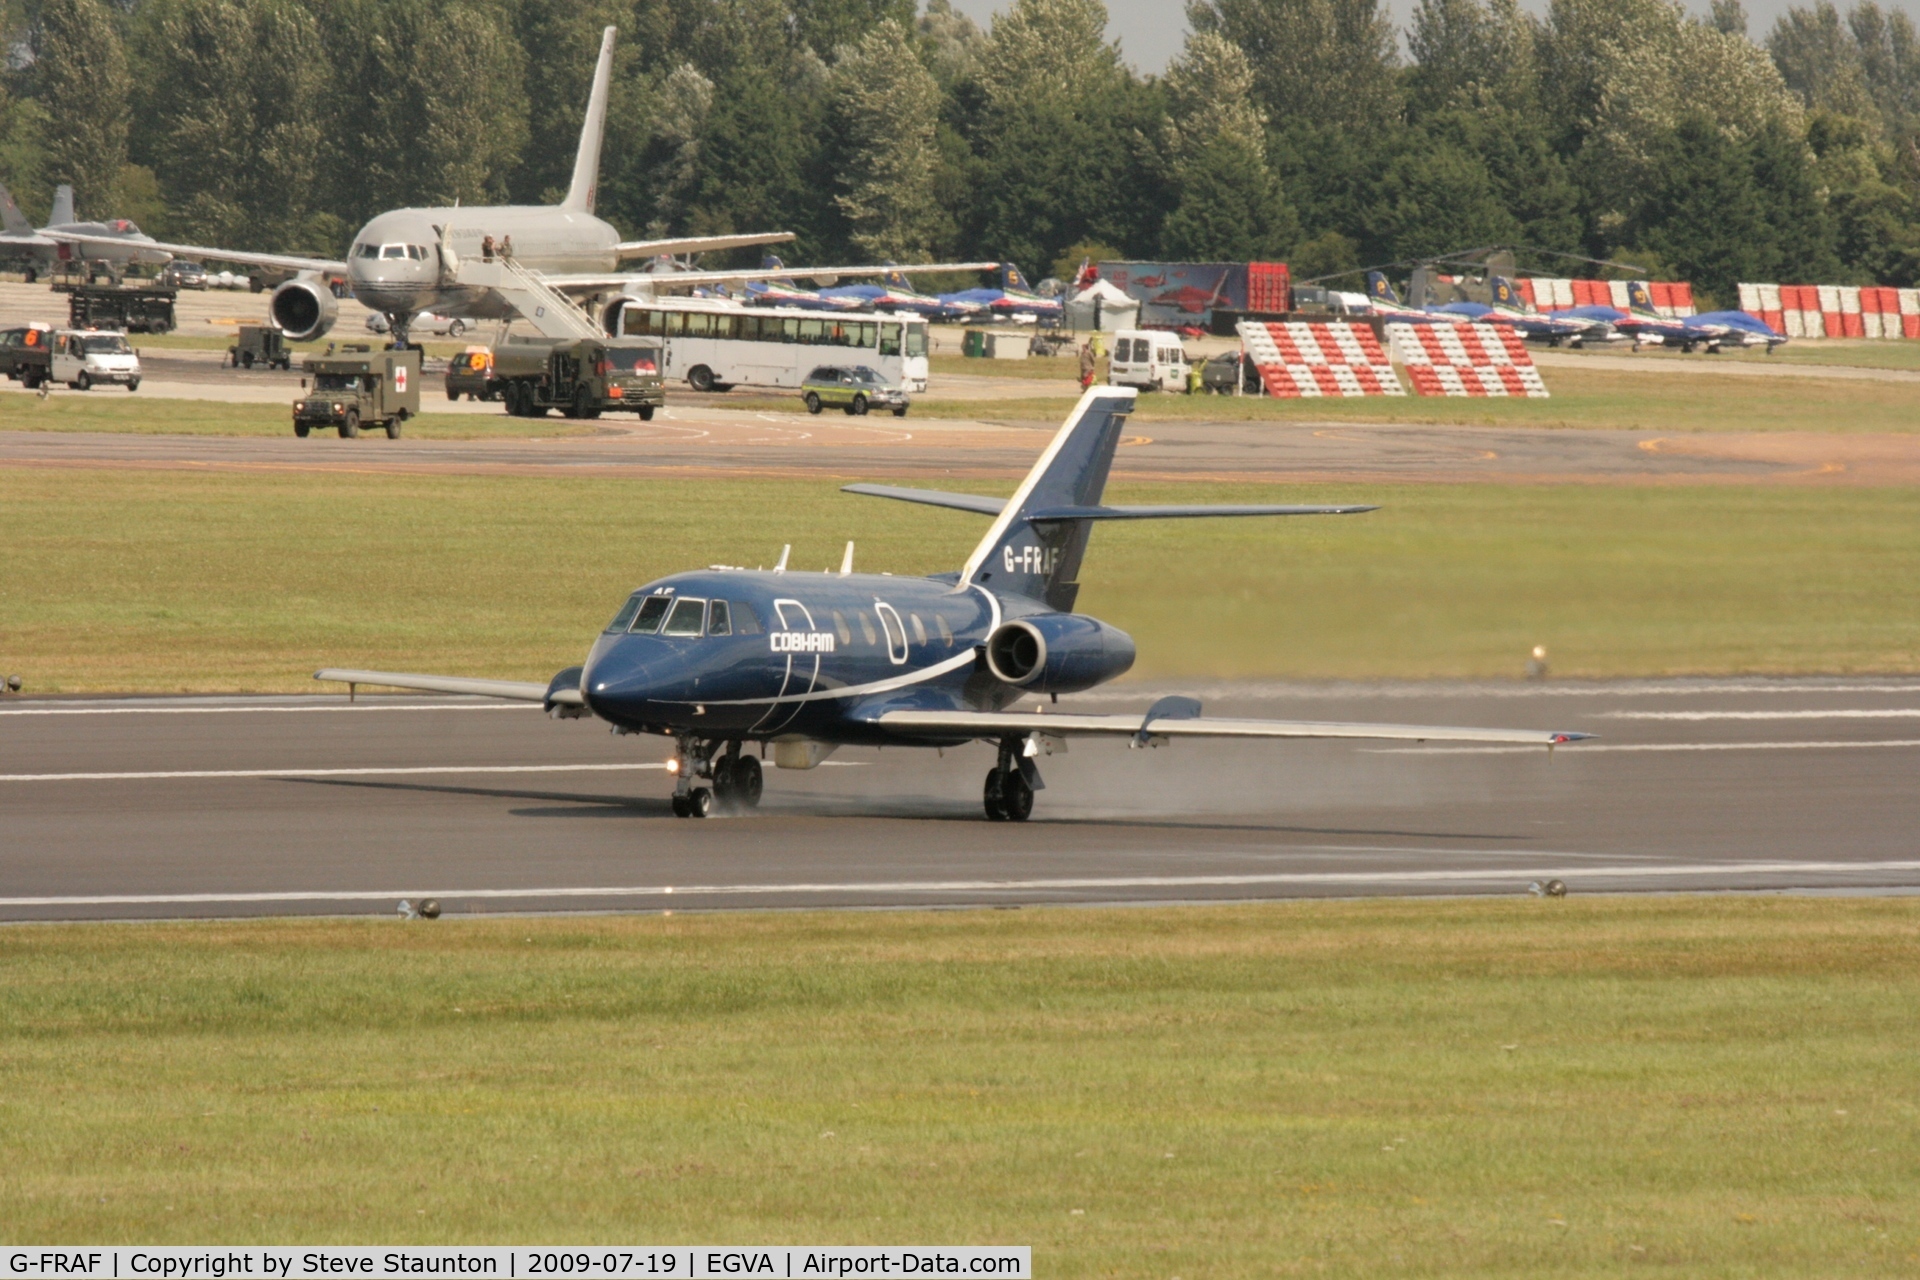 G-FRAF, 1974 Dassault Falcon (Mystere) 20E C/N 295, Taken at the Royal International Air Tattoo 2009